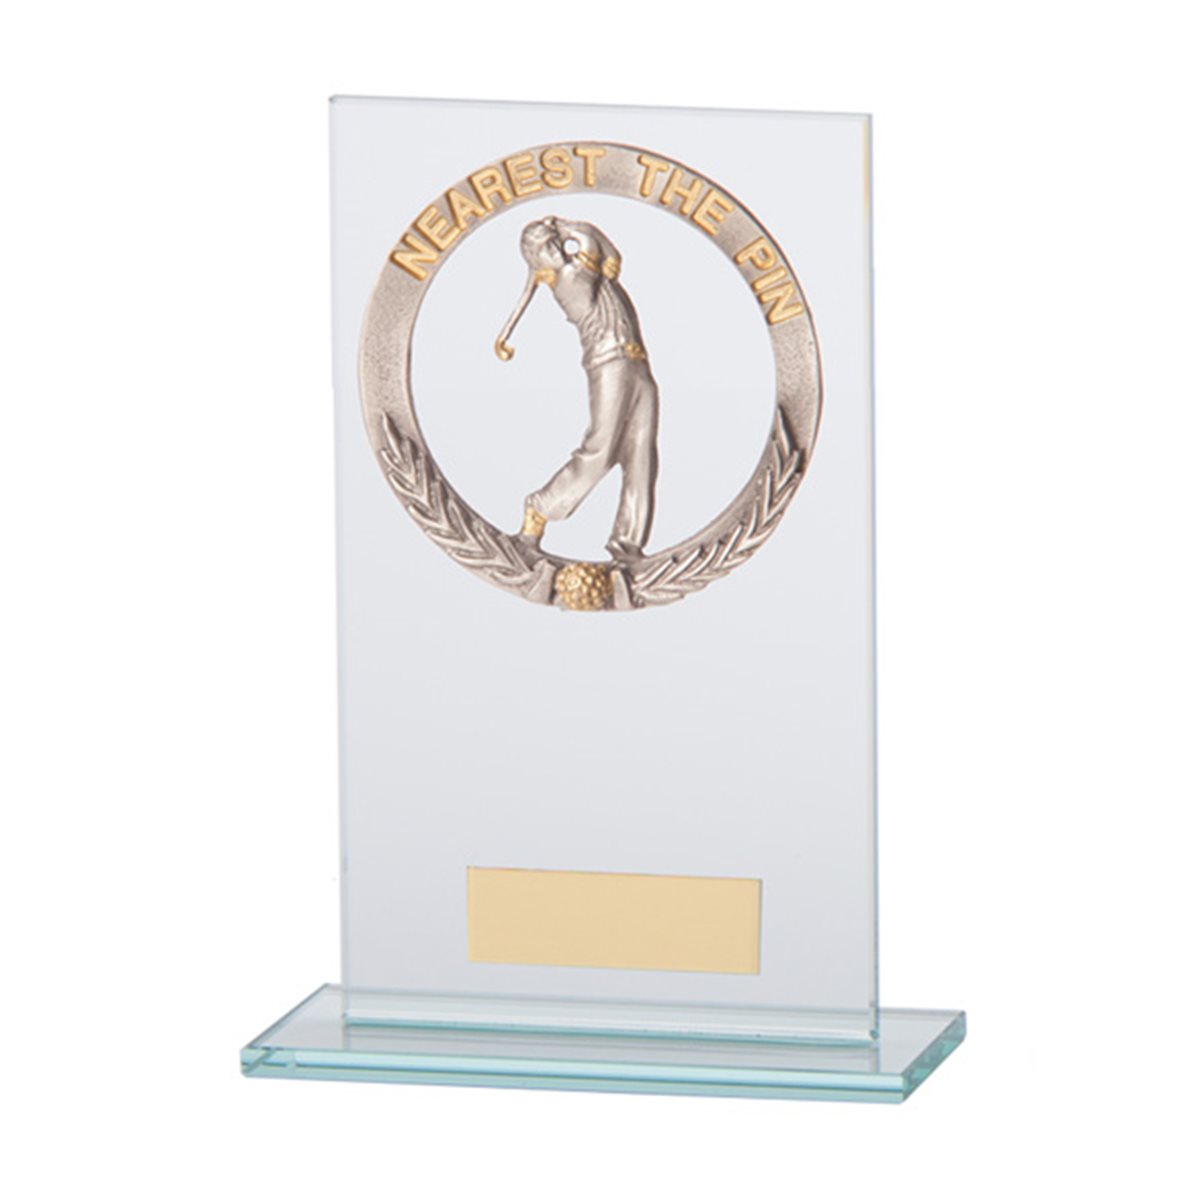 Waterford Nearest The Pin Golf Glass Award CR17509